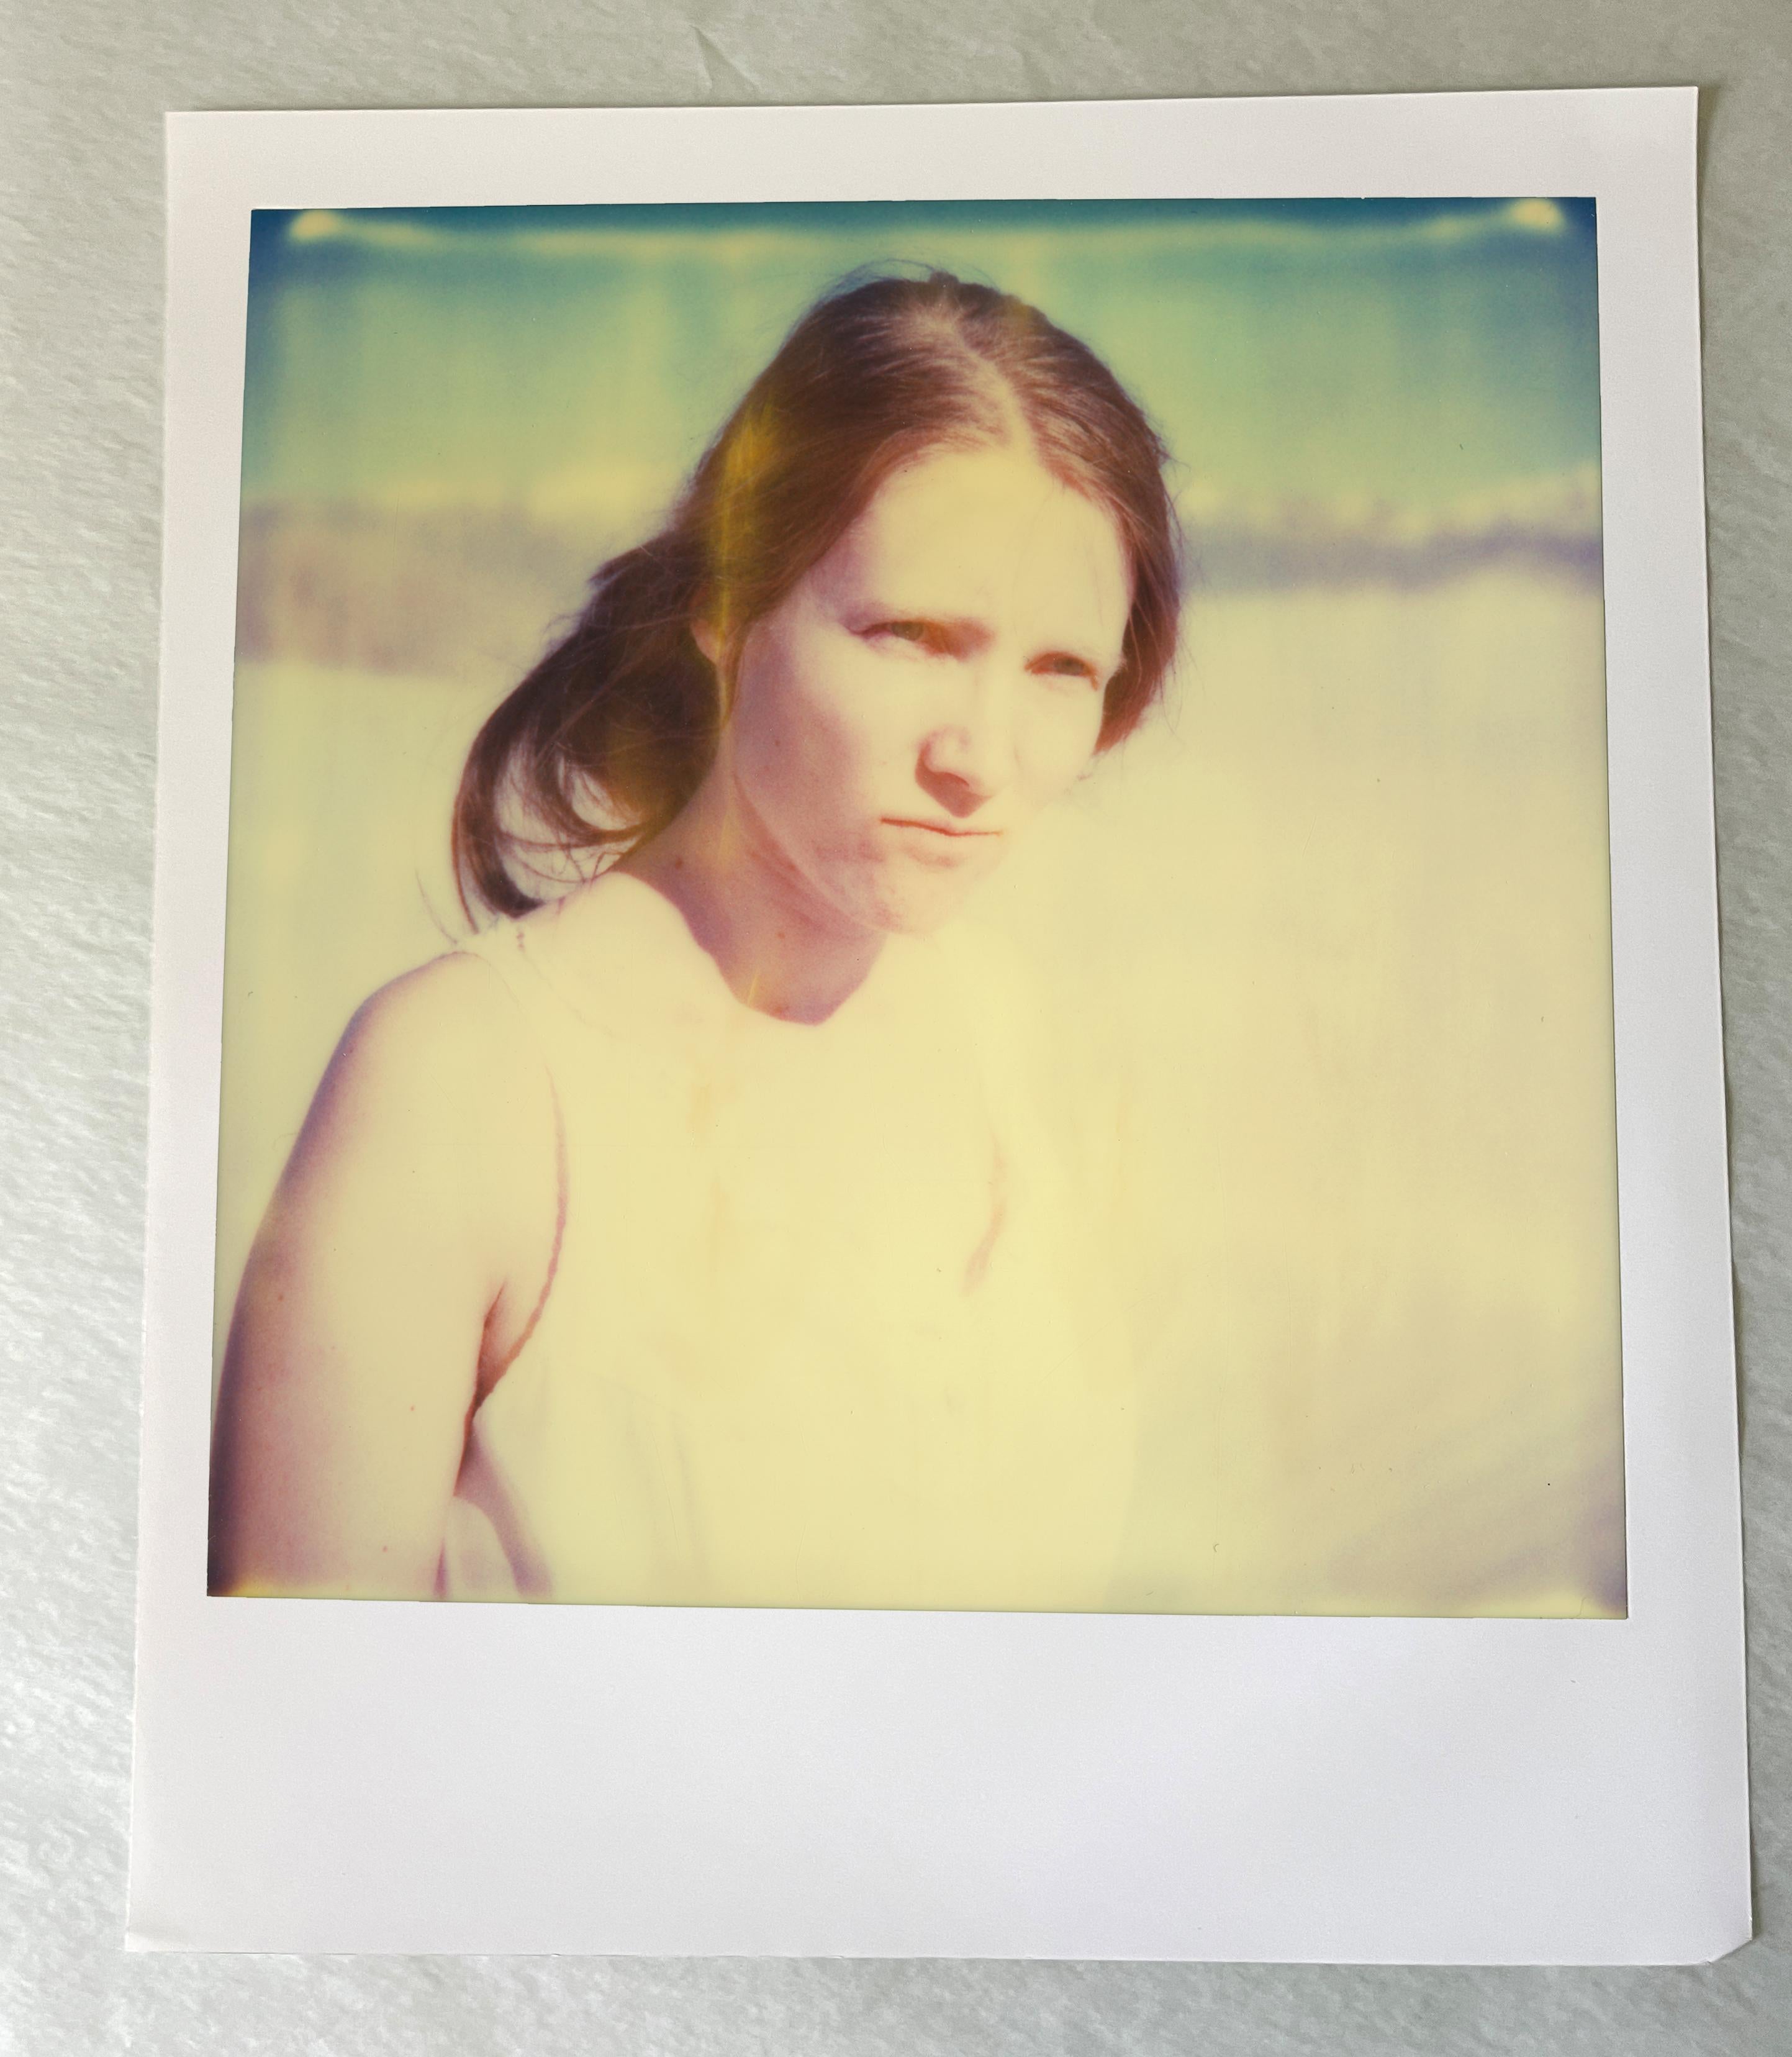 Untitled (Olancha) - Stranger than Paradise - analog C-Print based on a Polaroid - Photograph by Stefanie Schneider